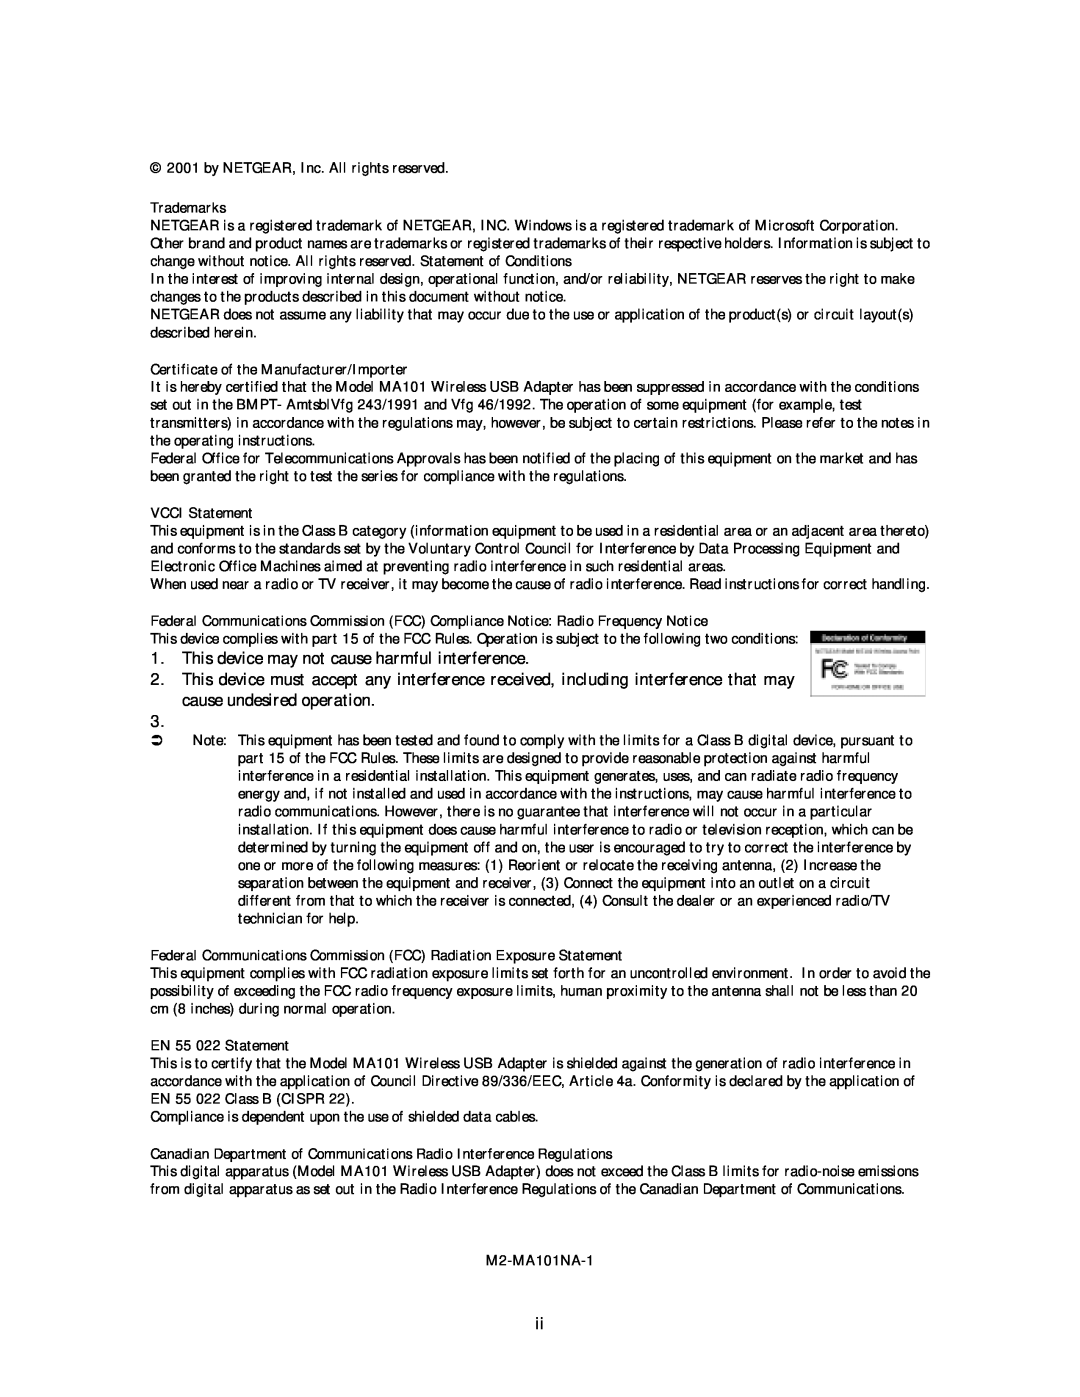 NETGEAR MA 101 manual Trademarks, Certificate of the Manufacturer/Importer, VCCI Statement, EN 55 022 Statement 